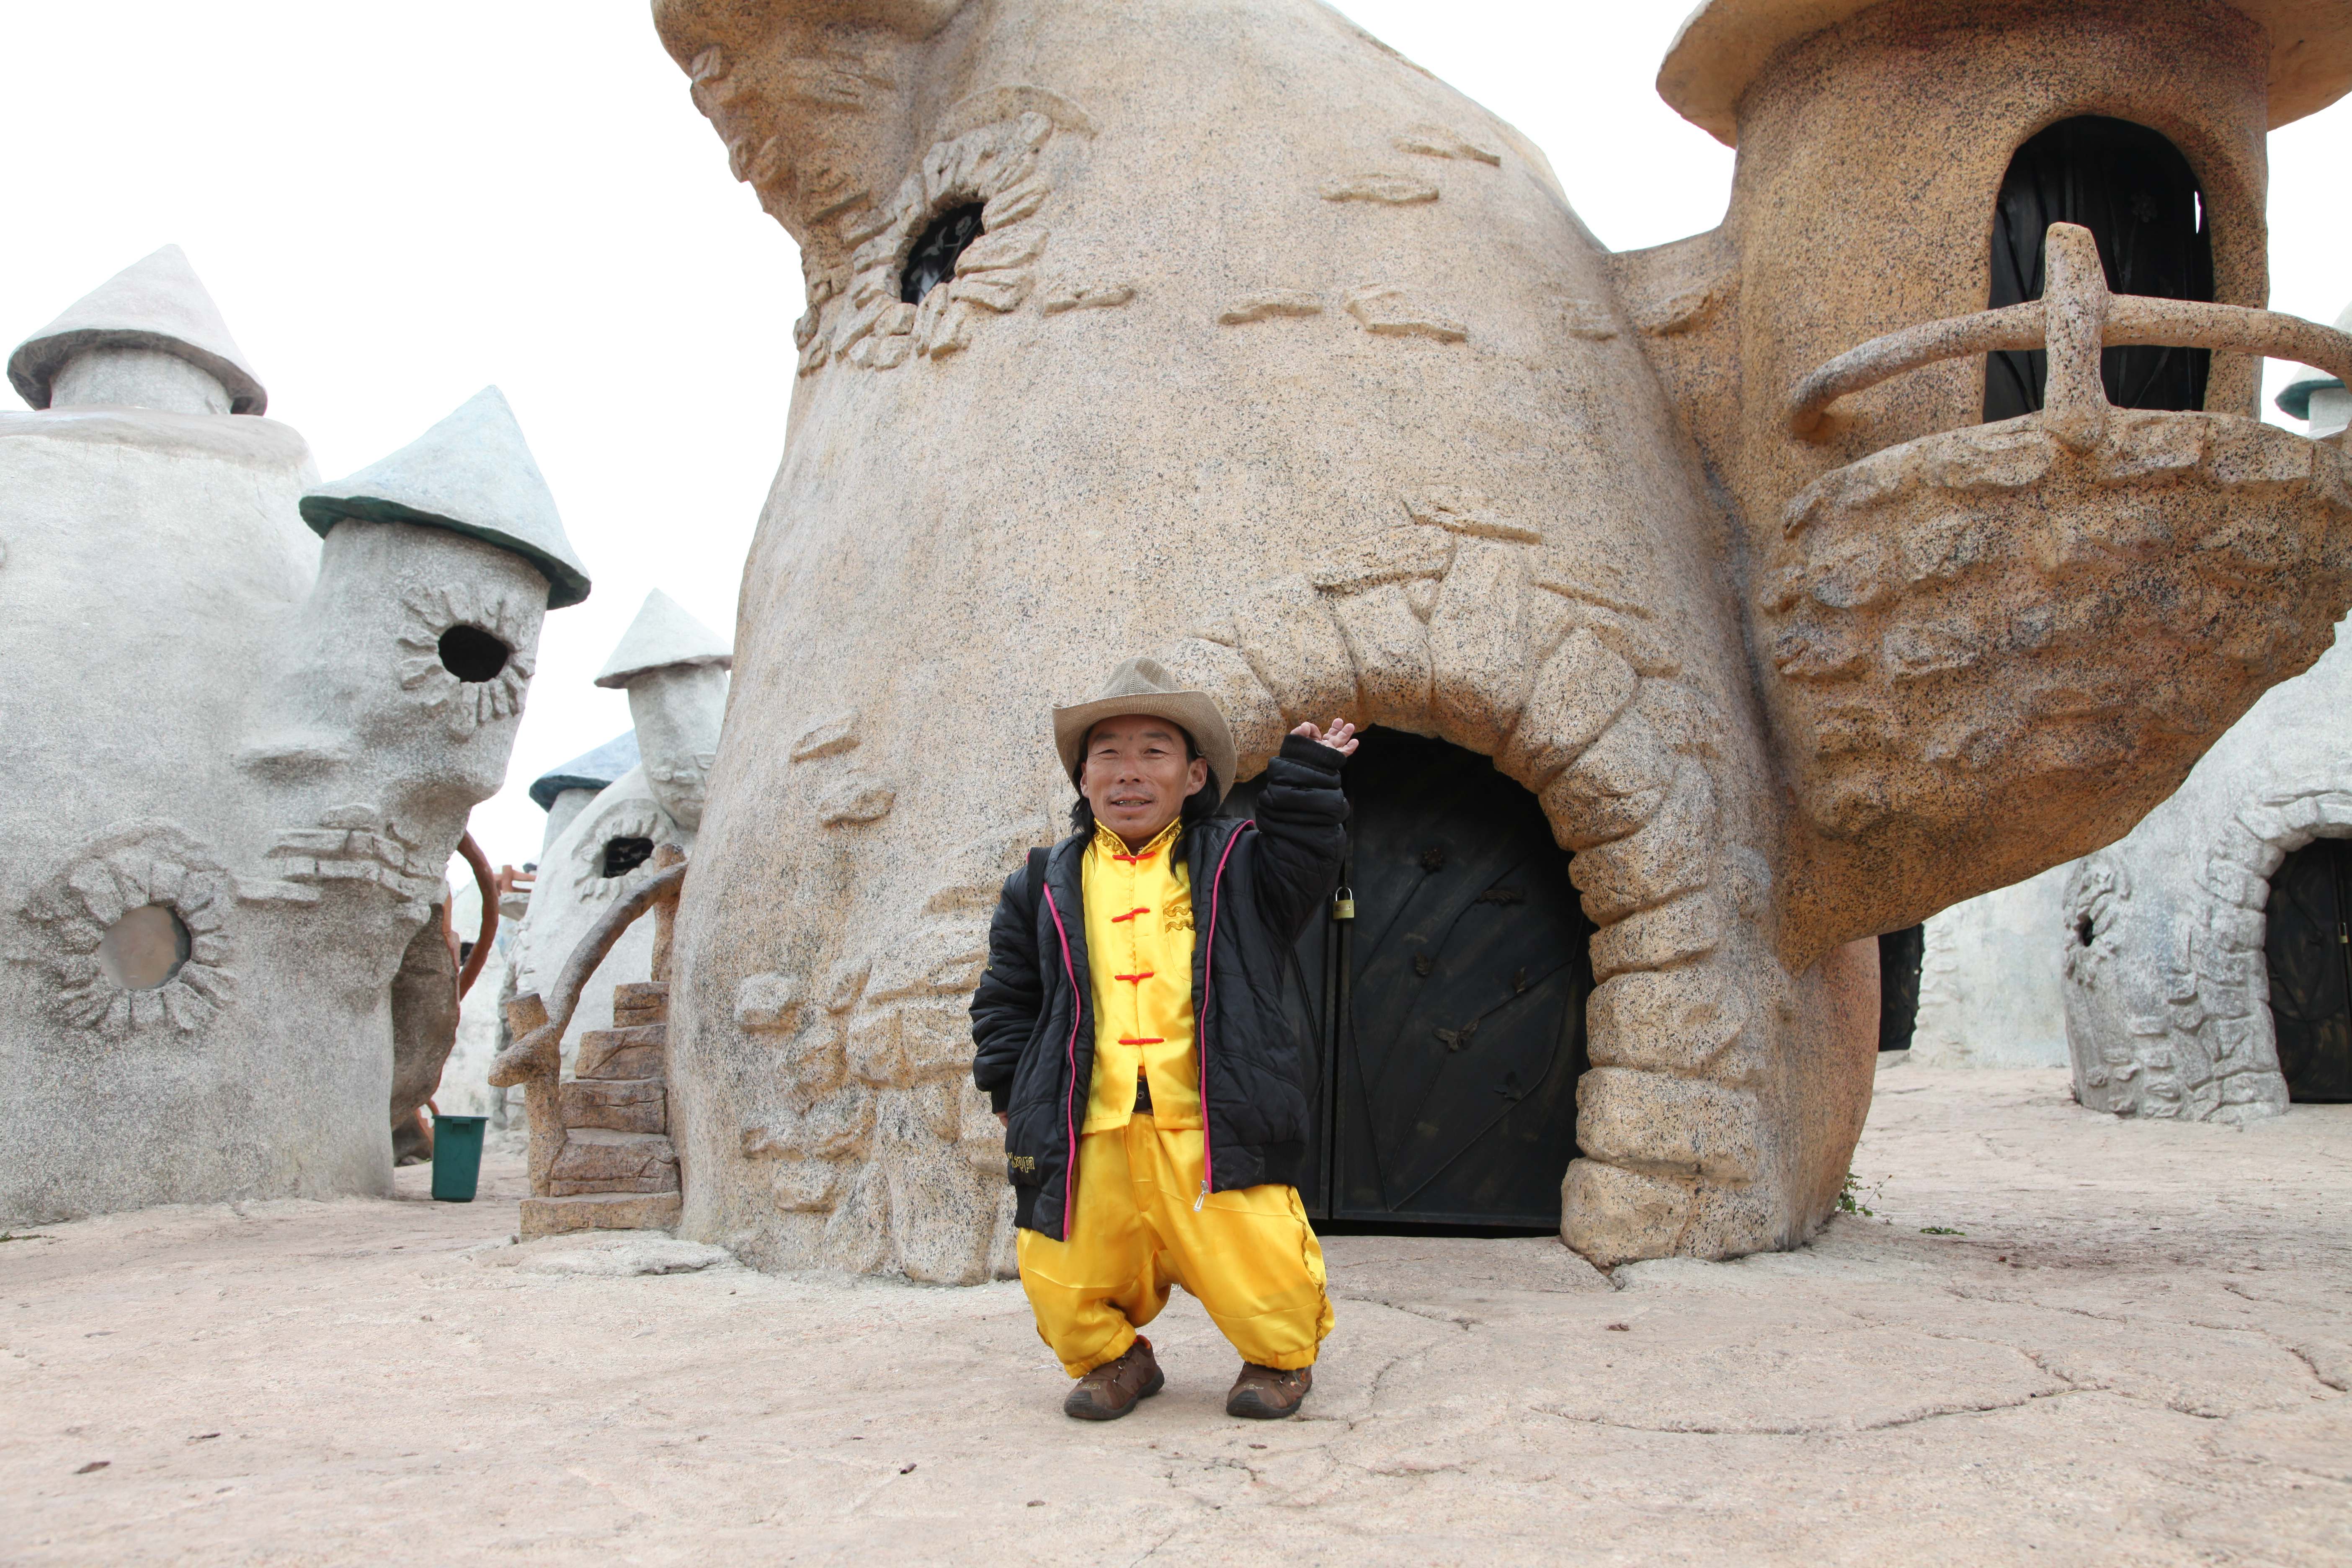 chinese midget theme park video gallerie photo